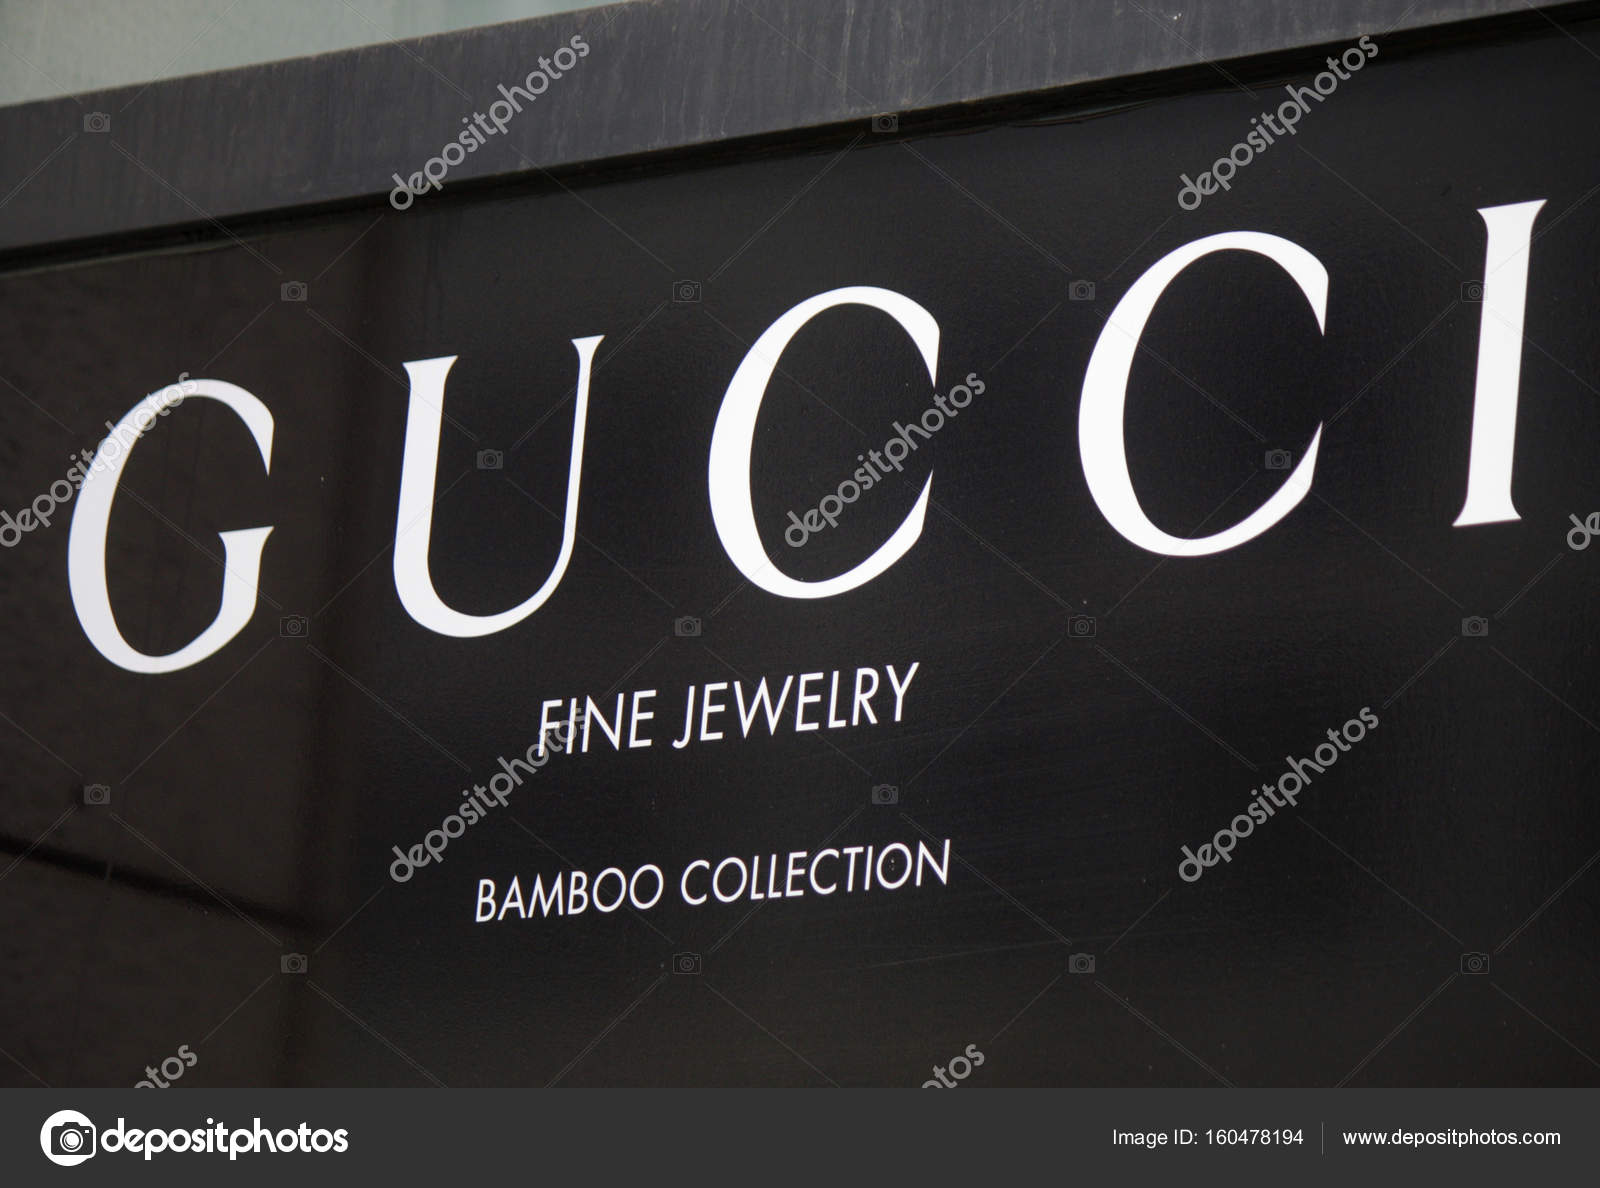 Omhyggelig læsning Selvrespekt salut Logo of brand "Gucci" – Stock Editorial Photo © 360ber #160478194